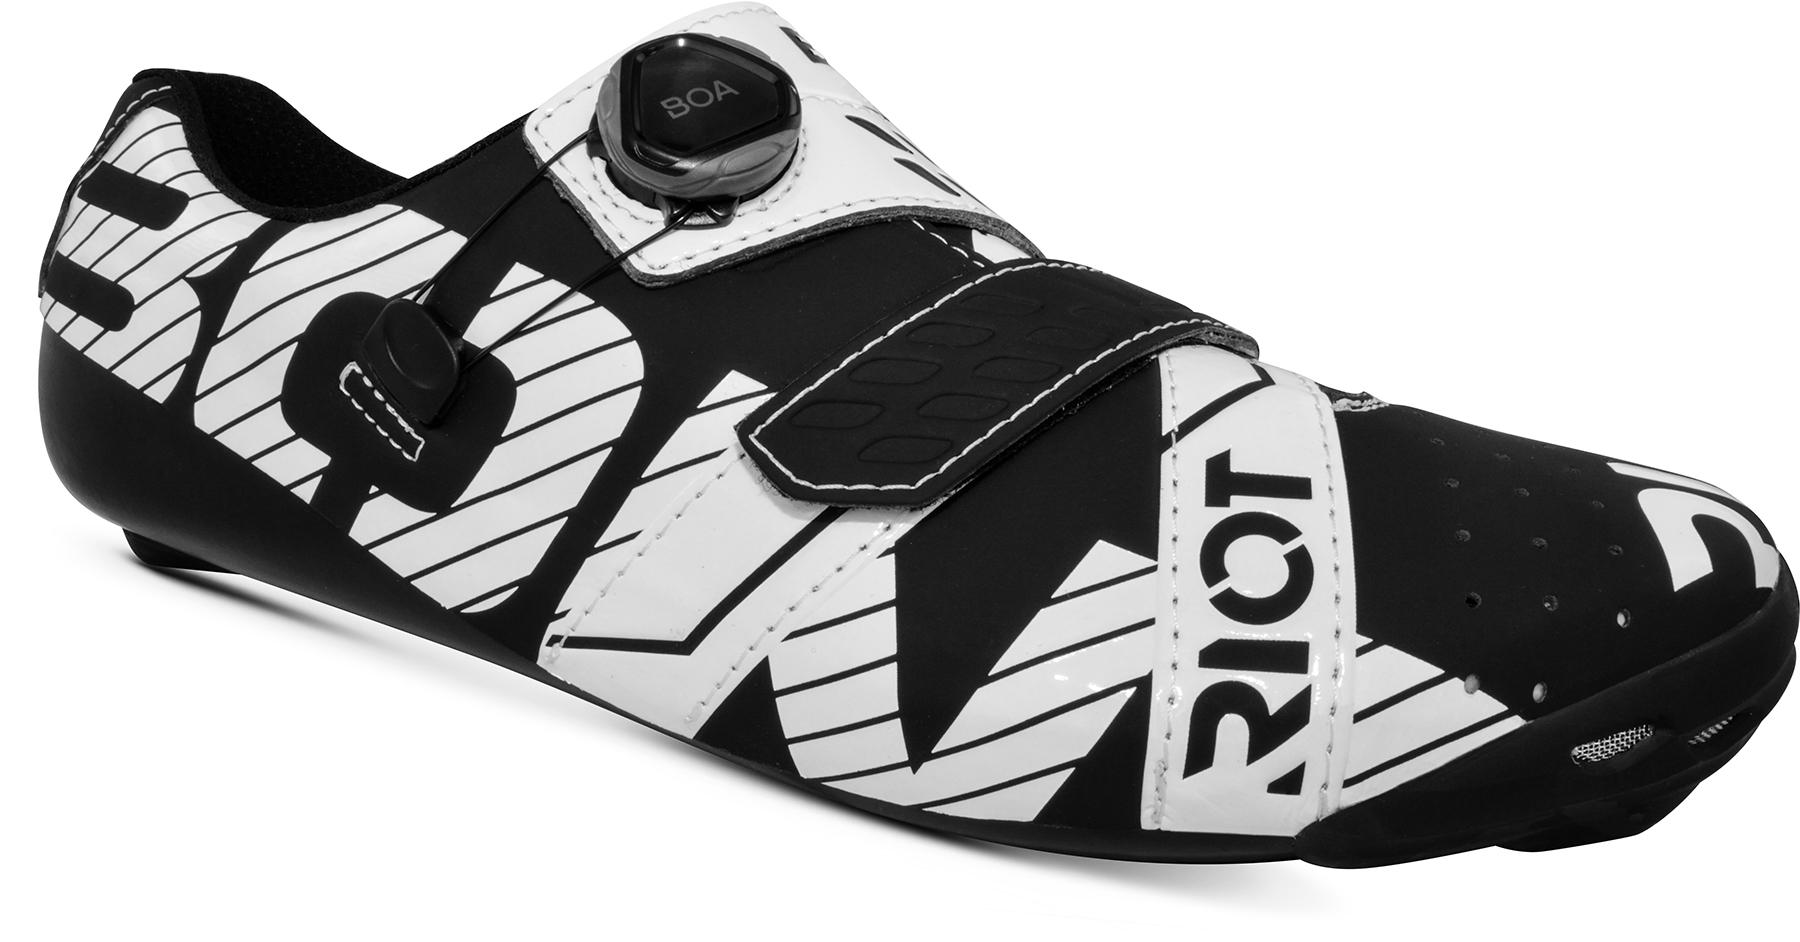 Bont Riot Road Plus Cycling Shoes (wide Fit) - Black/white